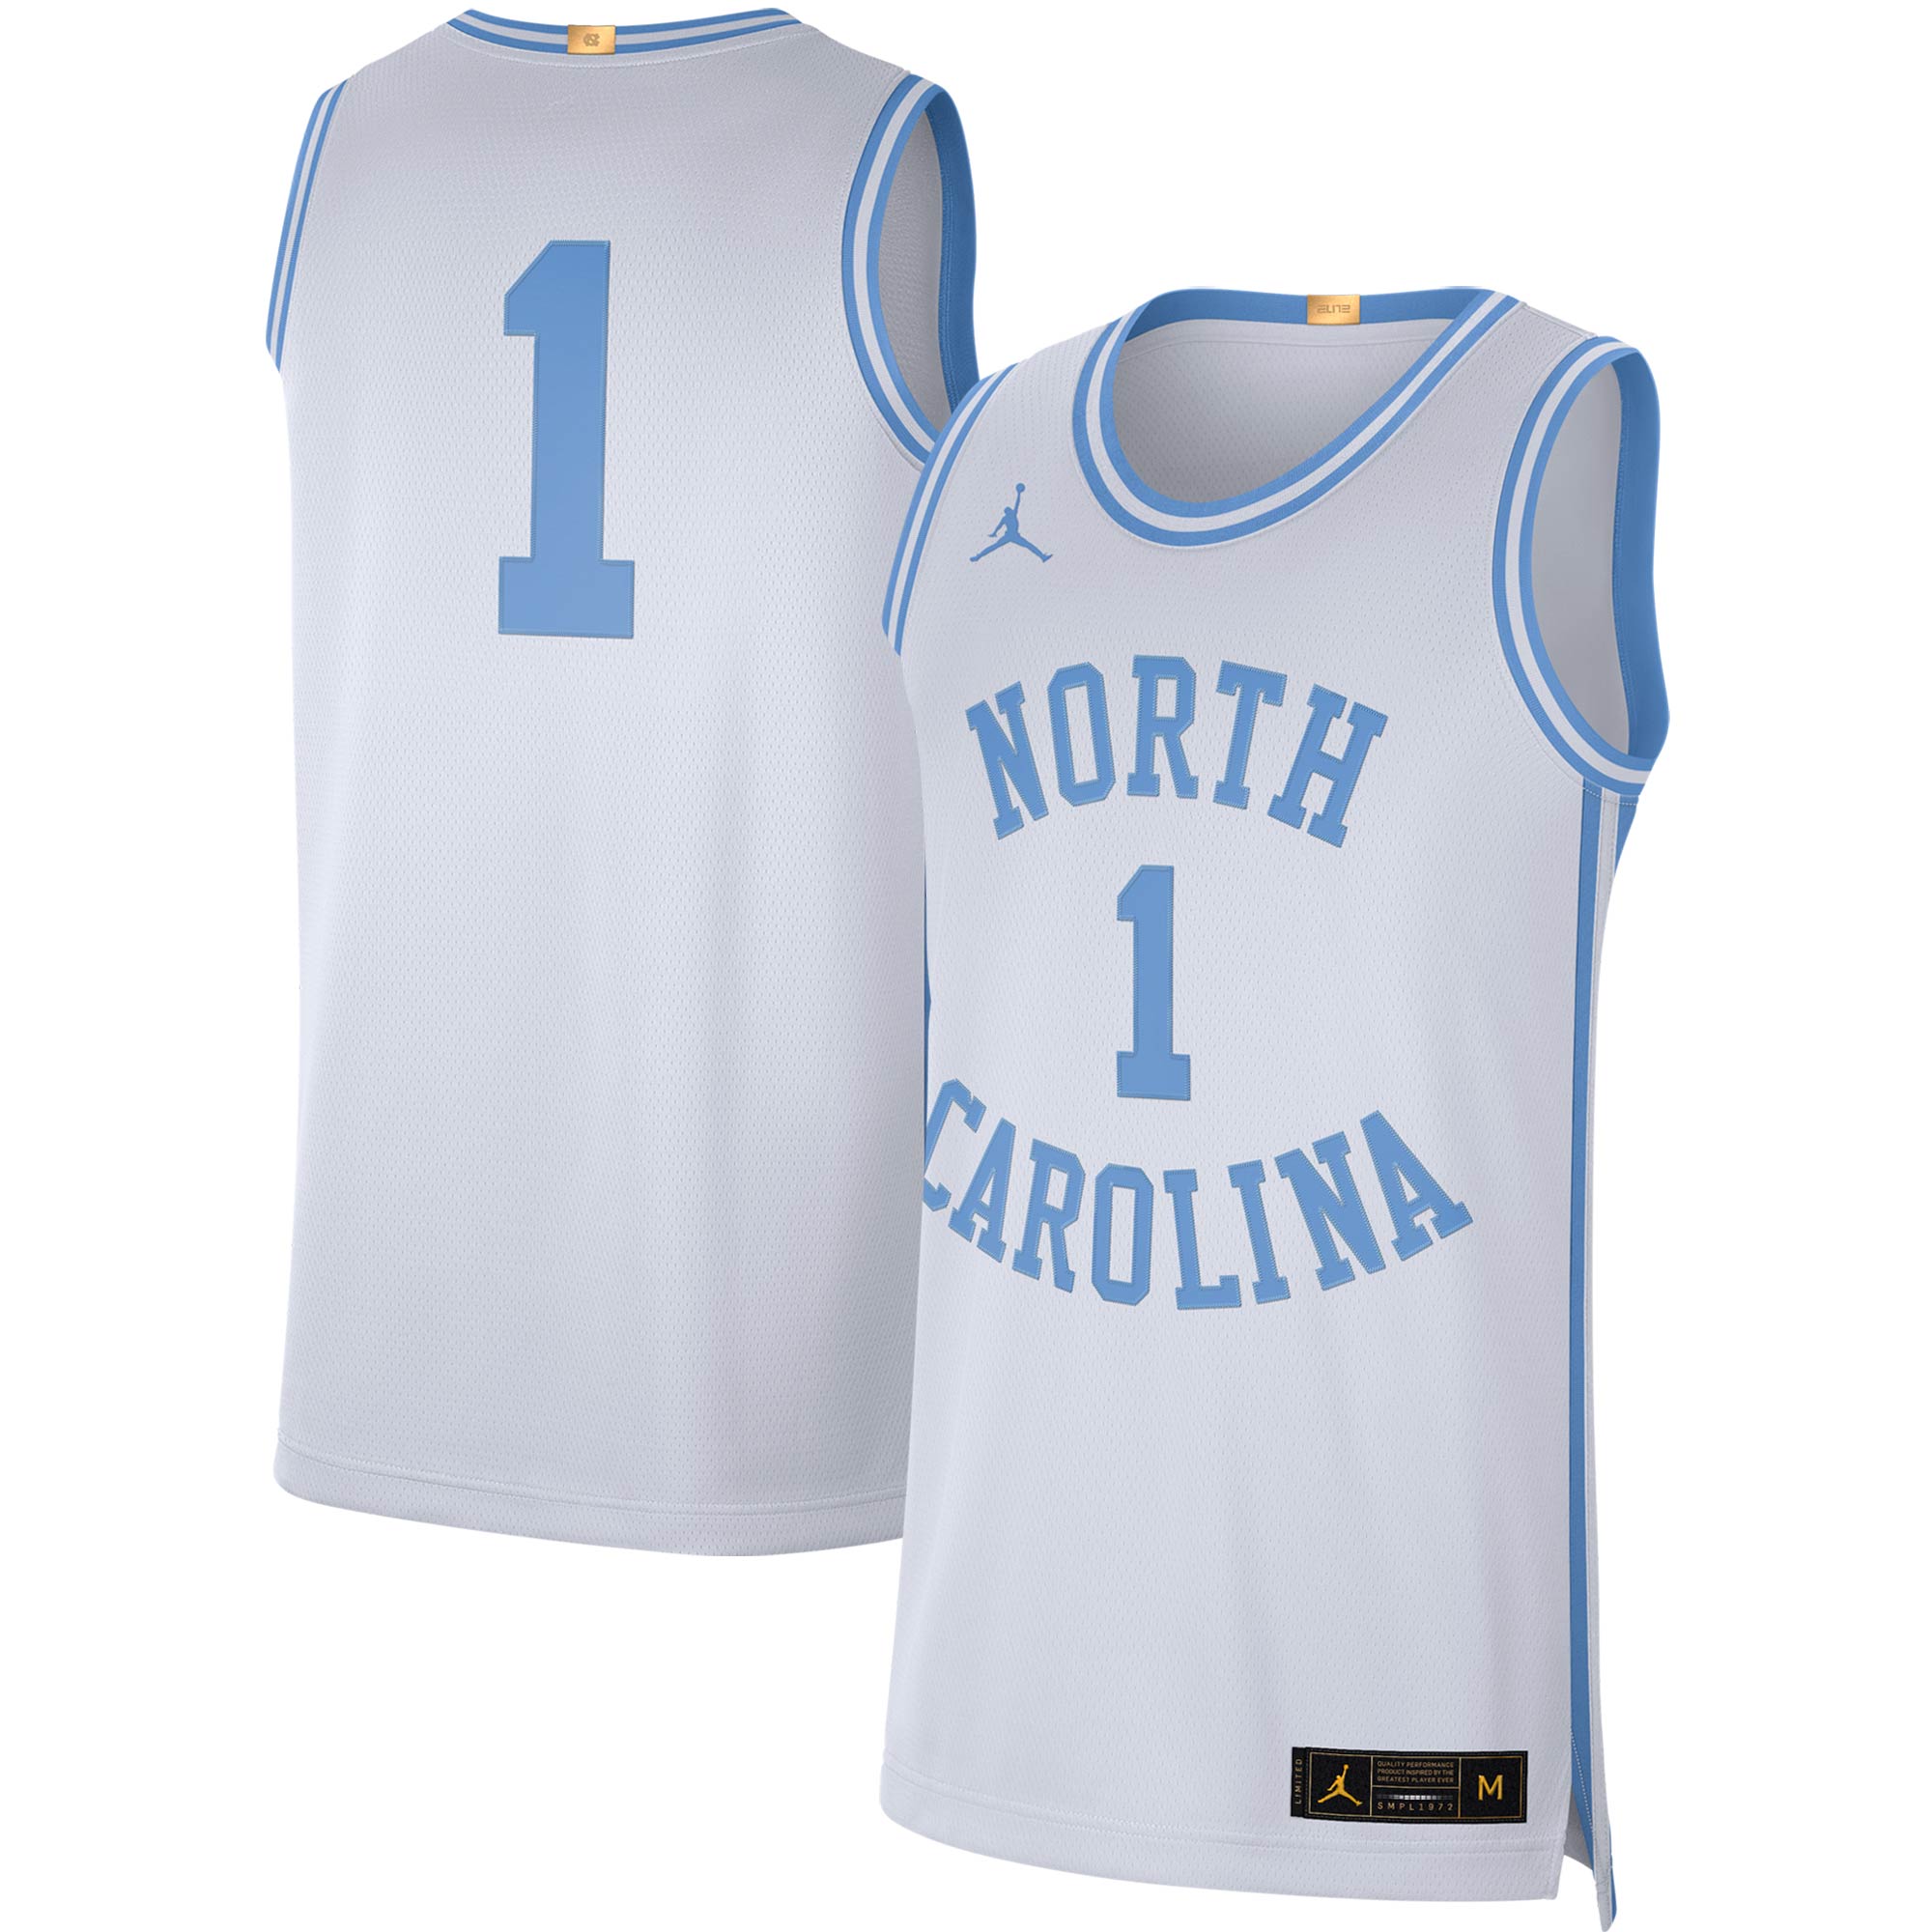 Foot Locker North Carolina Basketball Jersey Size XL